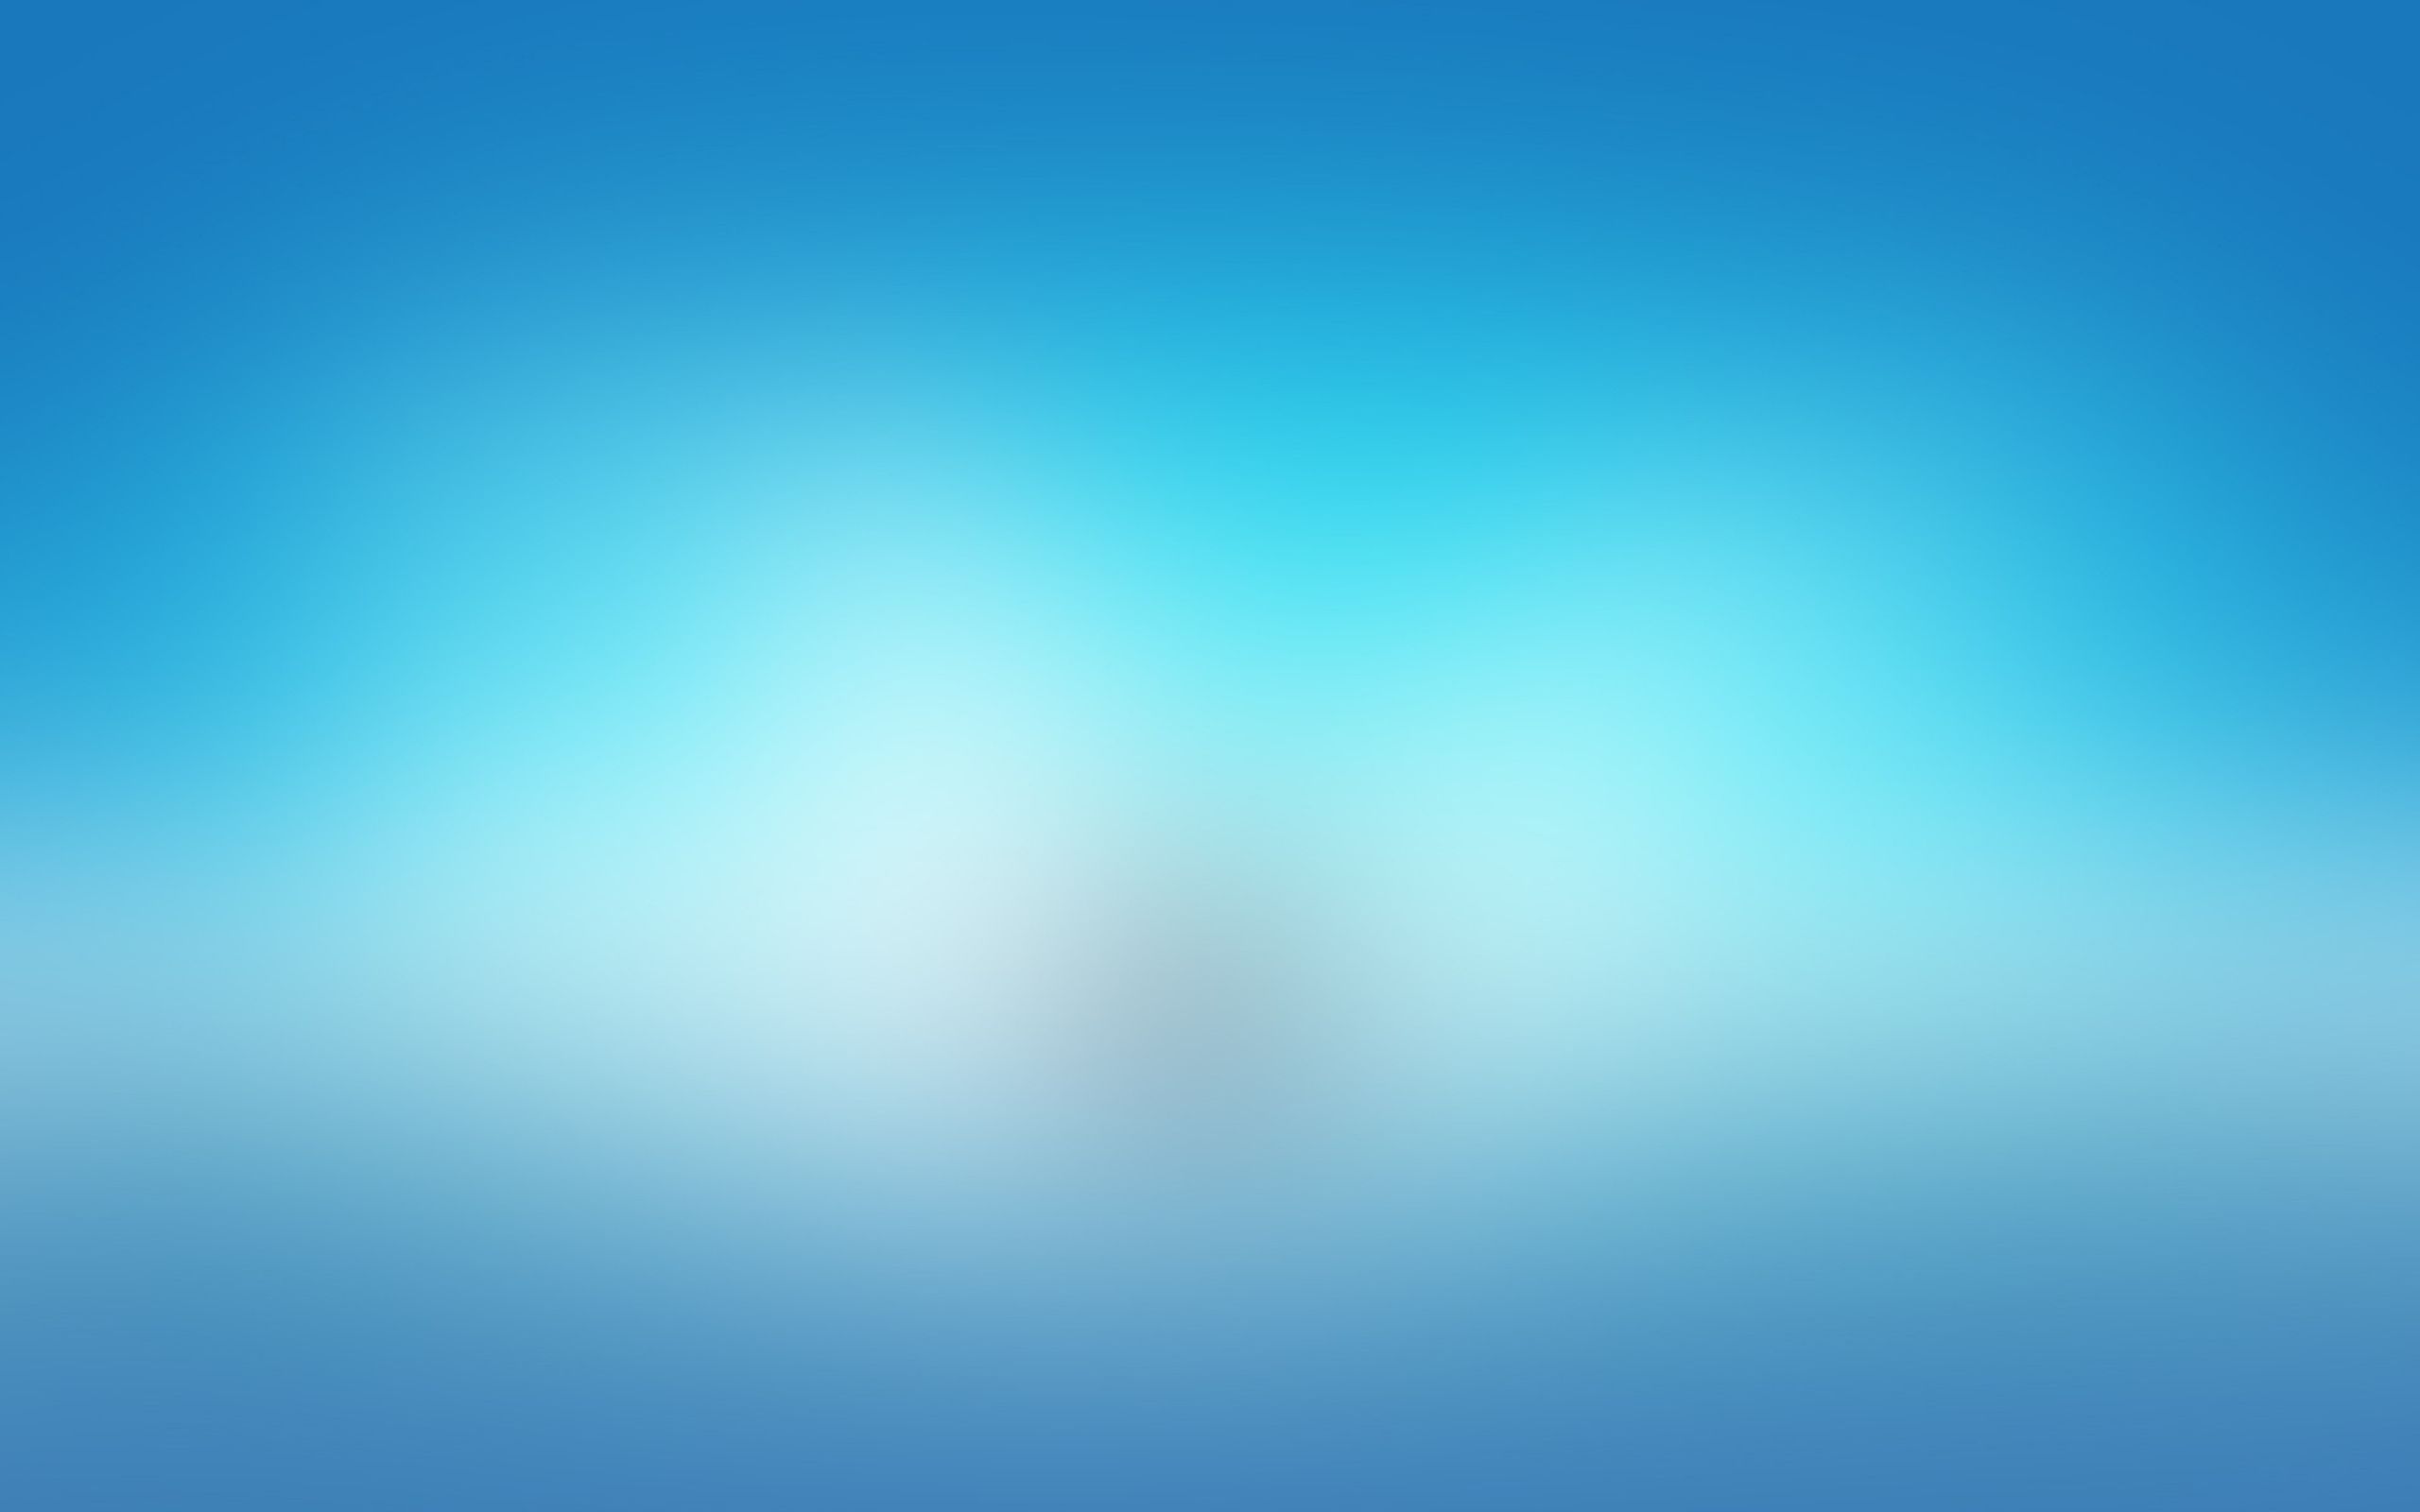 14 Blur HD Wallpapers | Backgrounds - Wallpaper Abyss